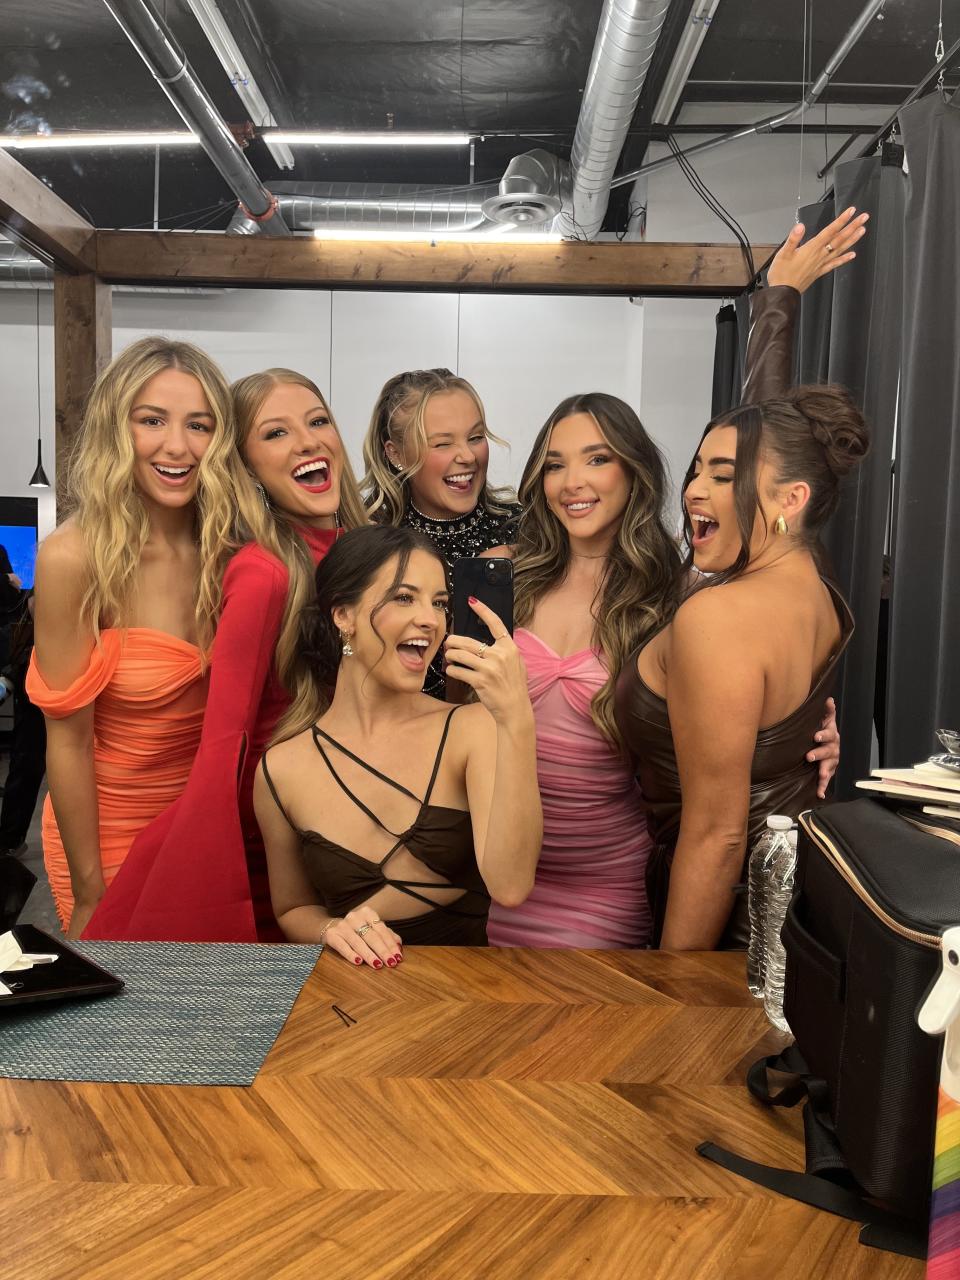 The "Dance Moms" stars taking a selfie